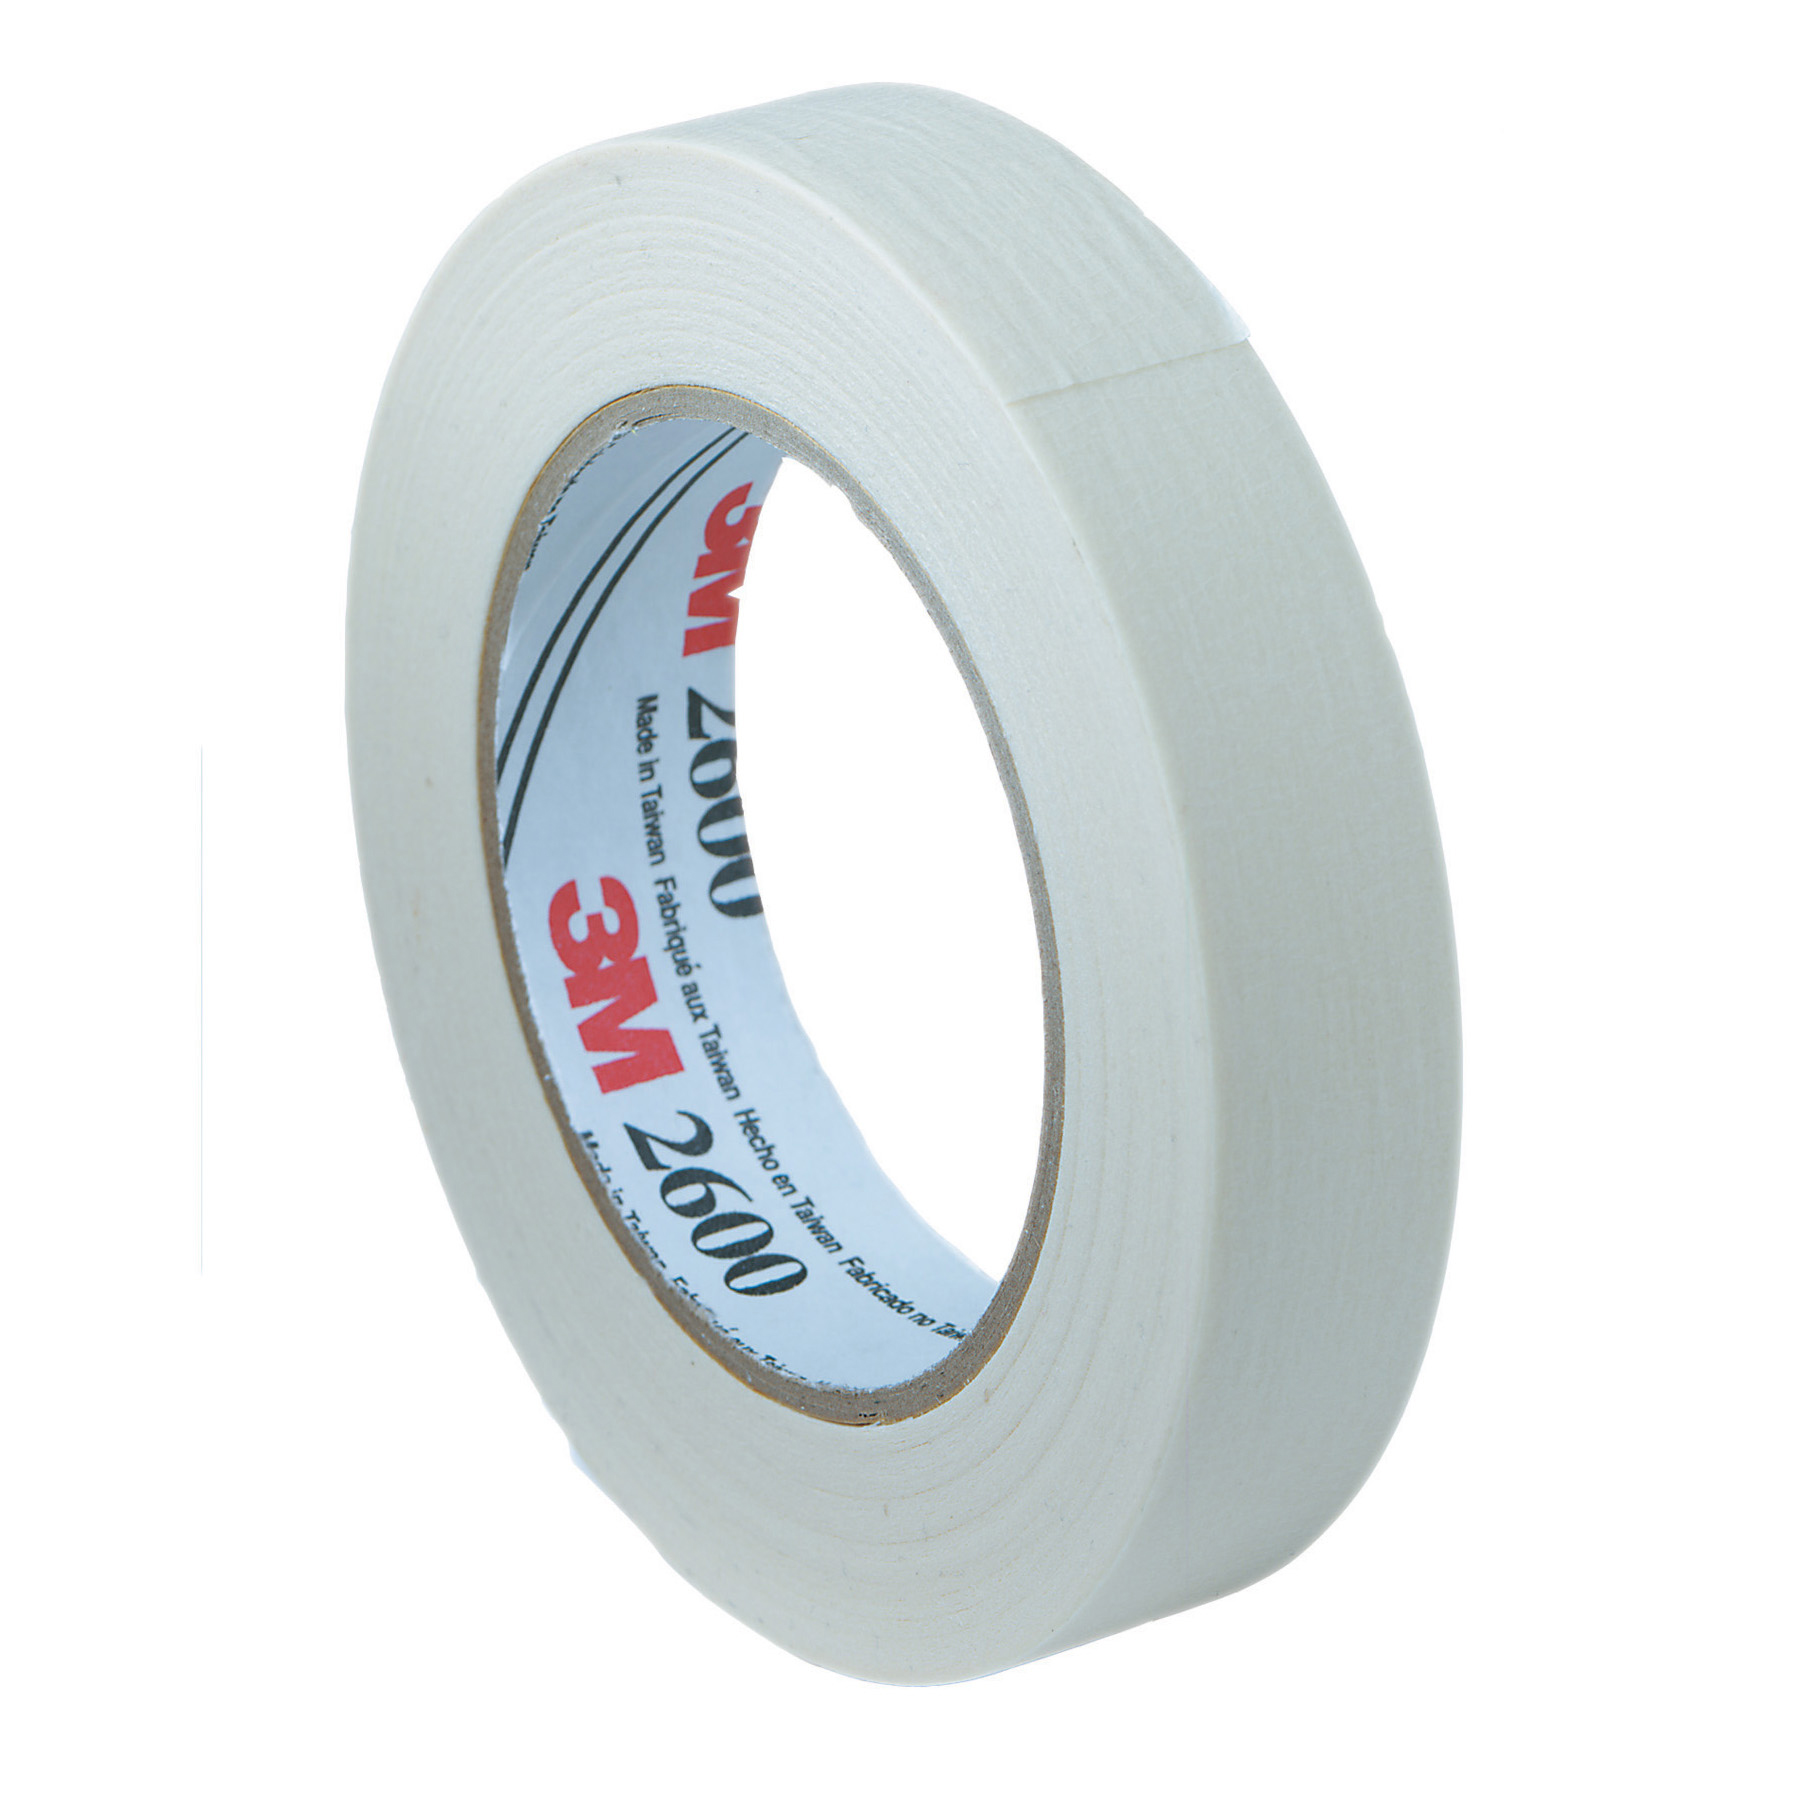 Premium Grade Masking Tape, 1 x 55 yds, Red - DSS46162